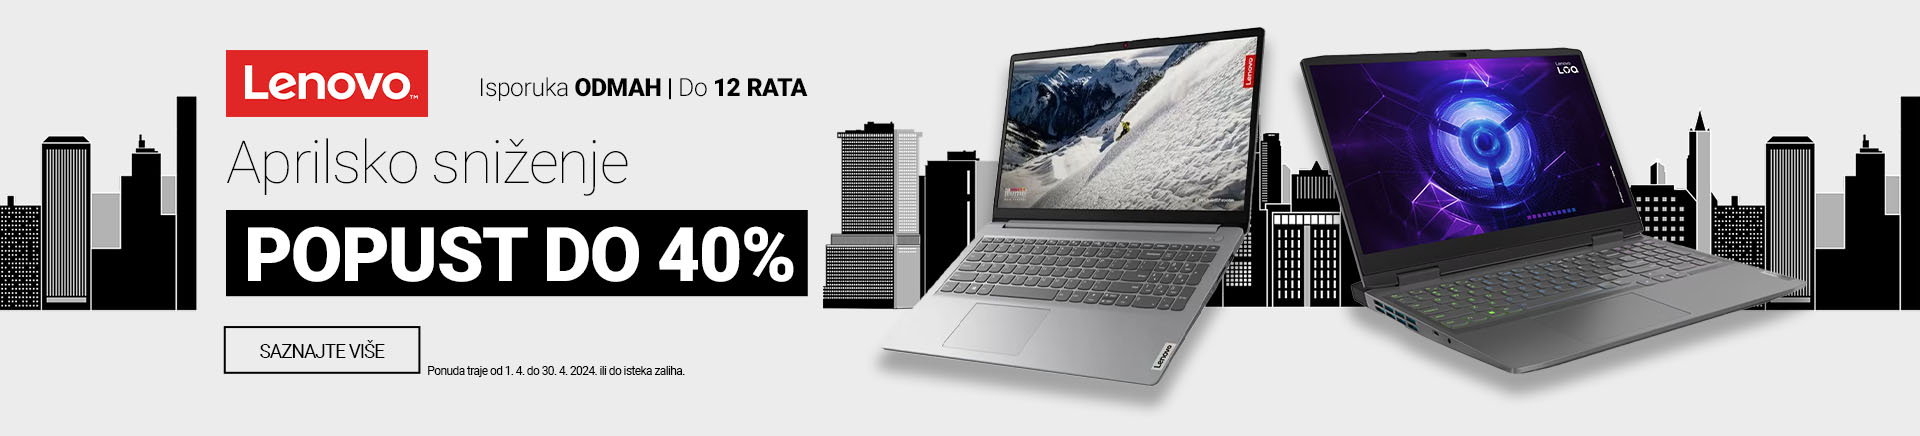 CG~Lenovo laptopi 40 posto popusta TABLET 768 X 436.jpg